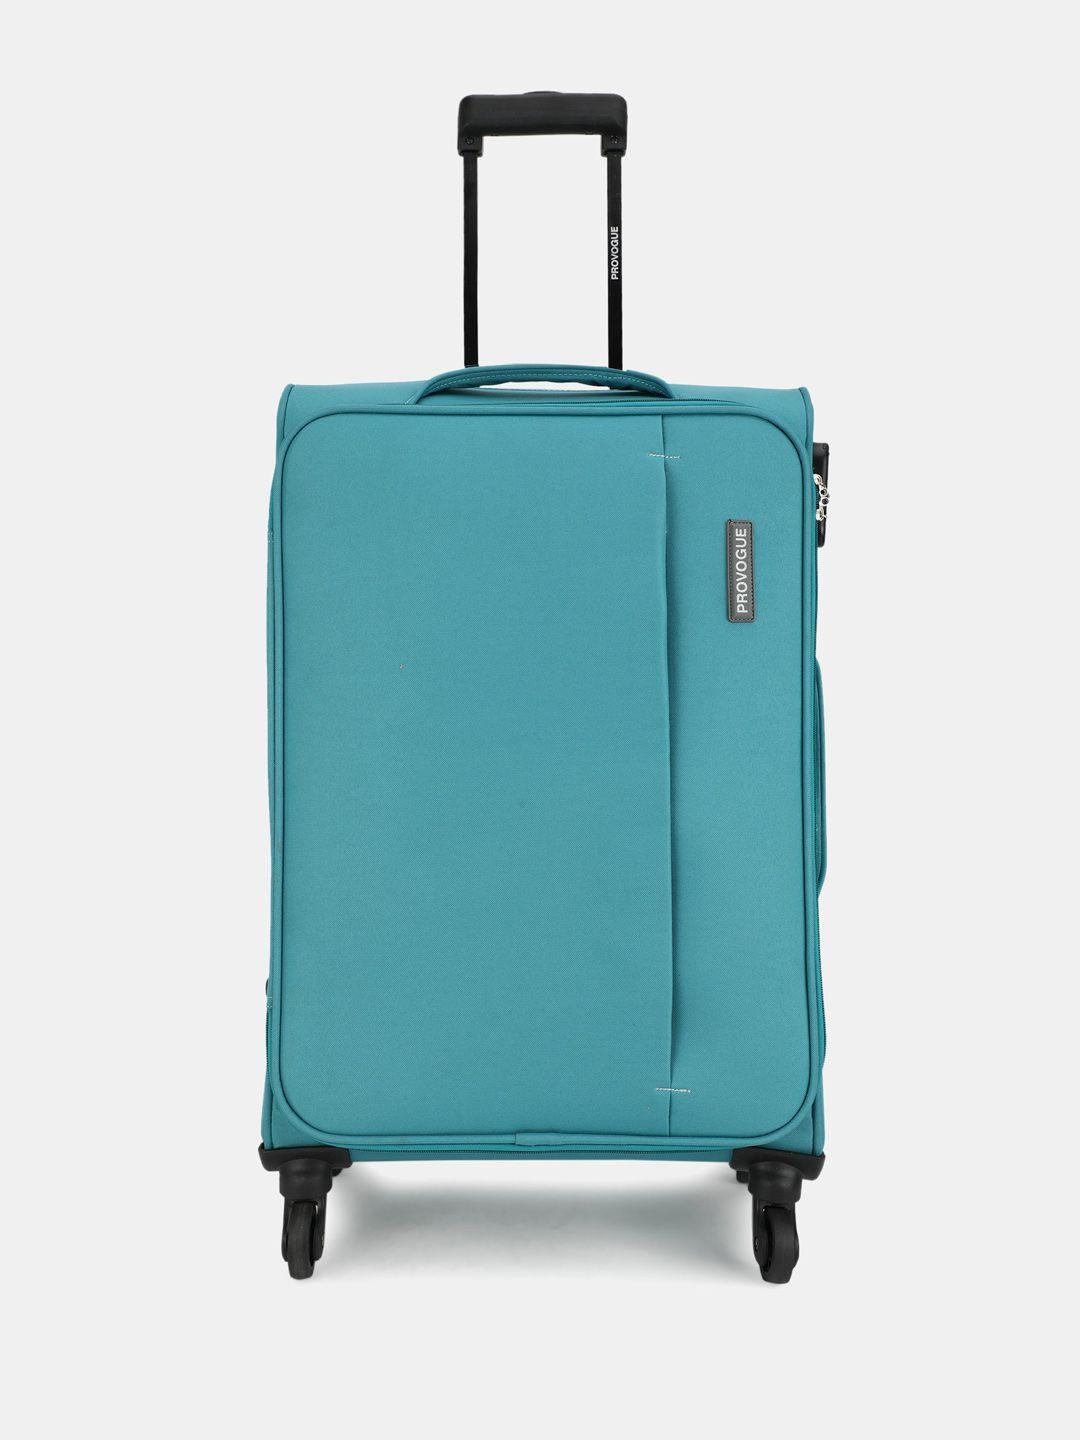 provogue-edge-medium-trolley-suitcase